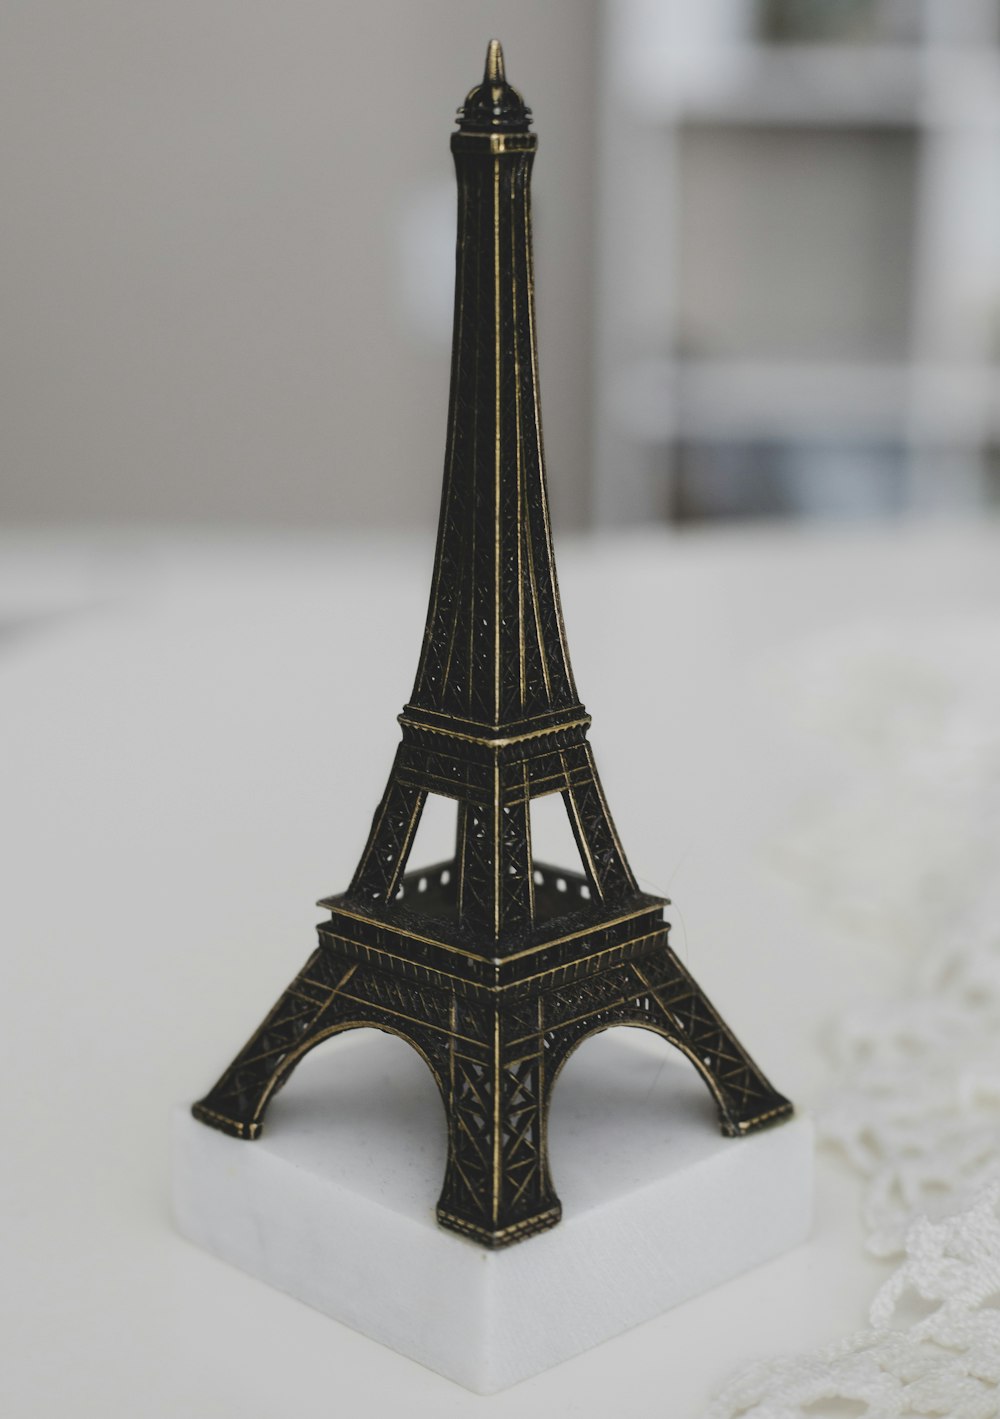 Miniatura da Torre Eiffel na superfície branca